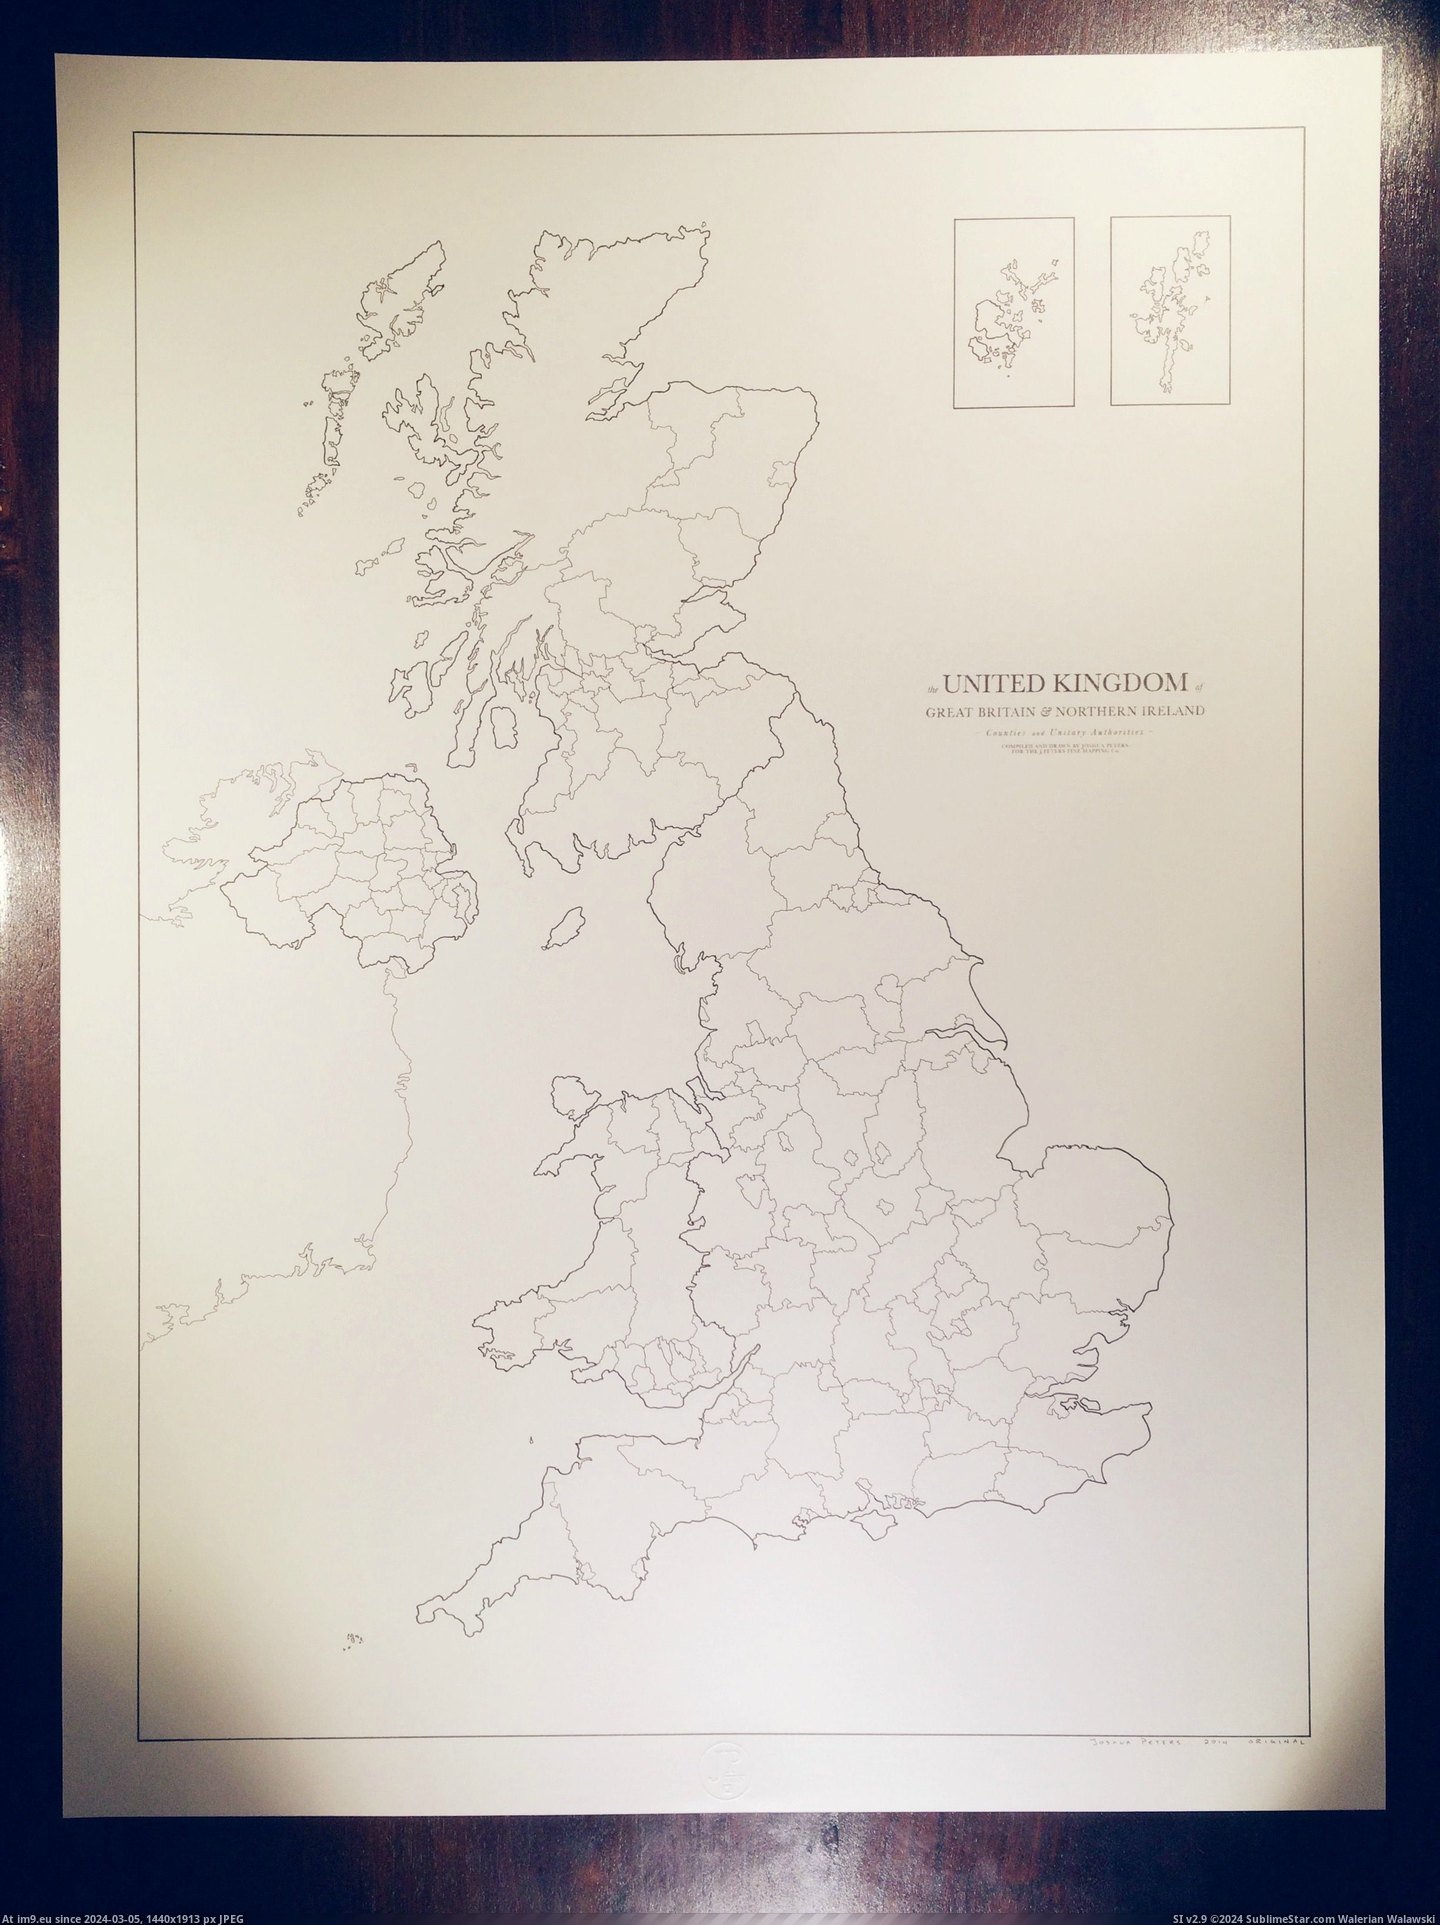 #Great #United #Northern #Britain #Boundaries #Ireland #Kingdom #Counties [Mapporn] The United Kingdom of Great Britain & Northern Ireland: Counties and Unitary Boundaries [2448 × 3264] Pic. (Bild von album My r/MAPS favs))